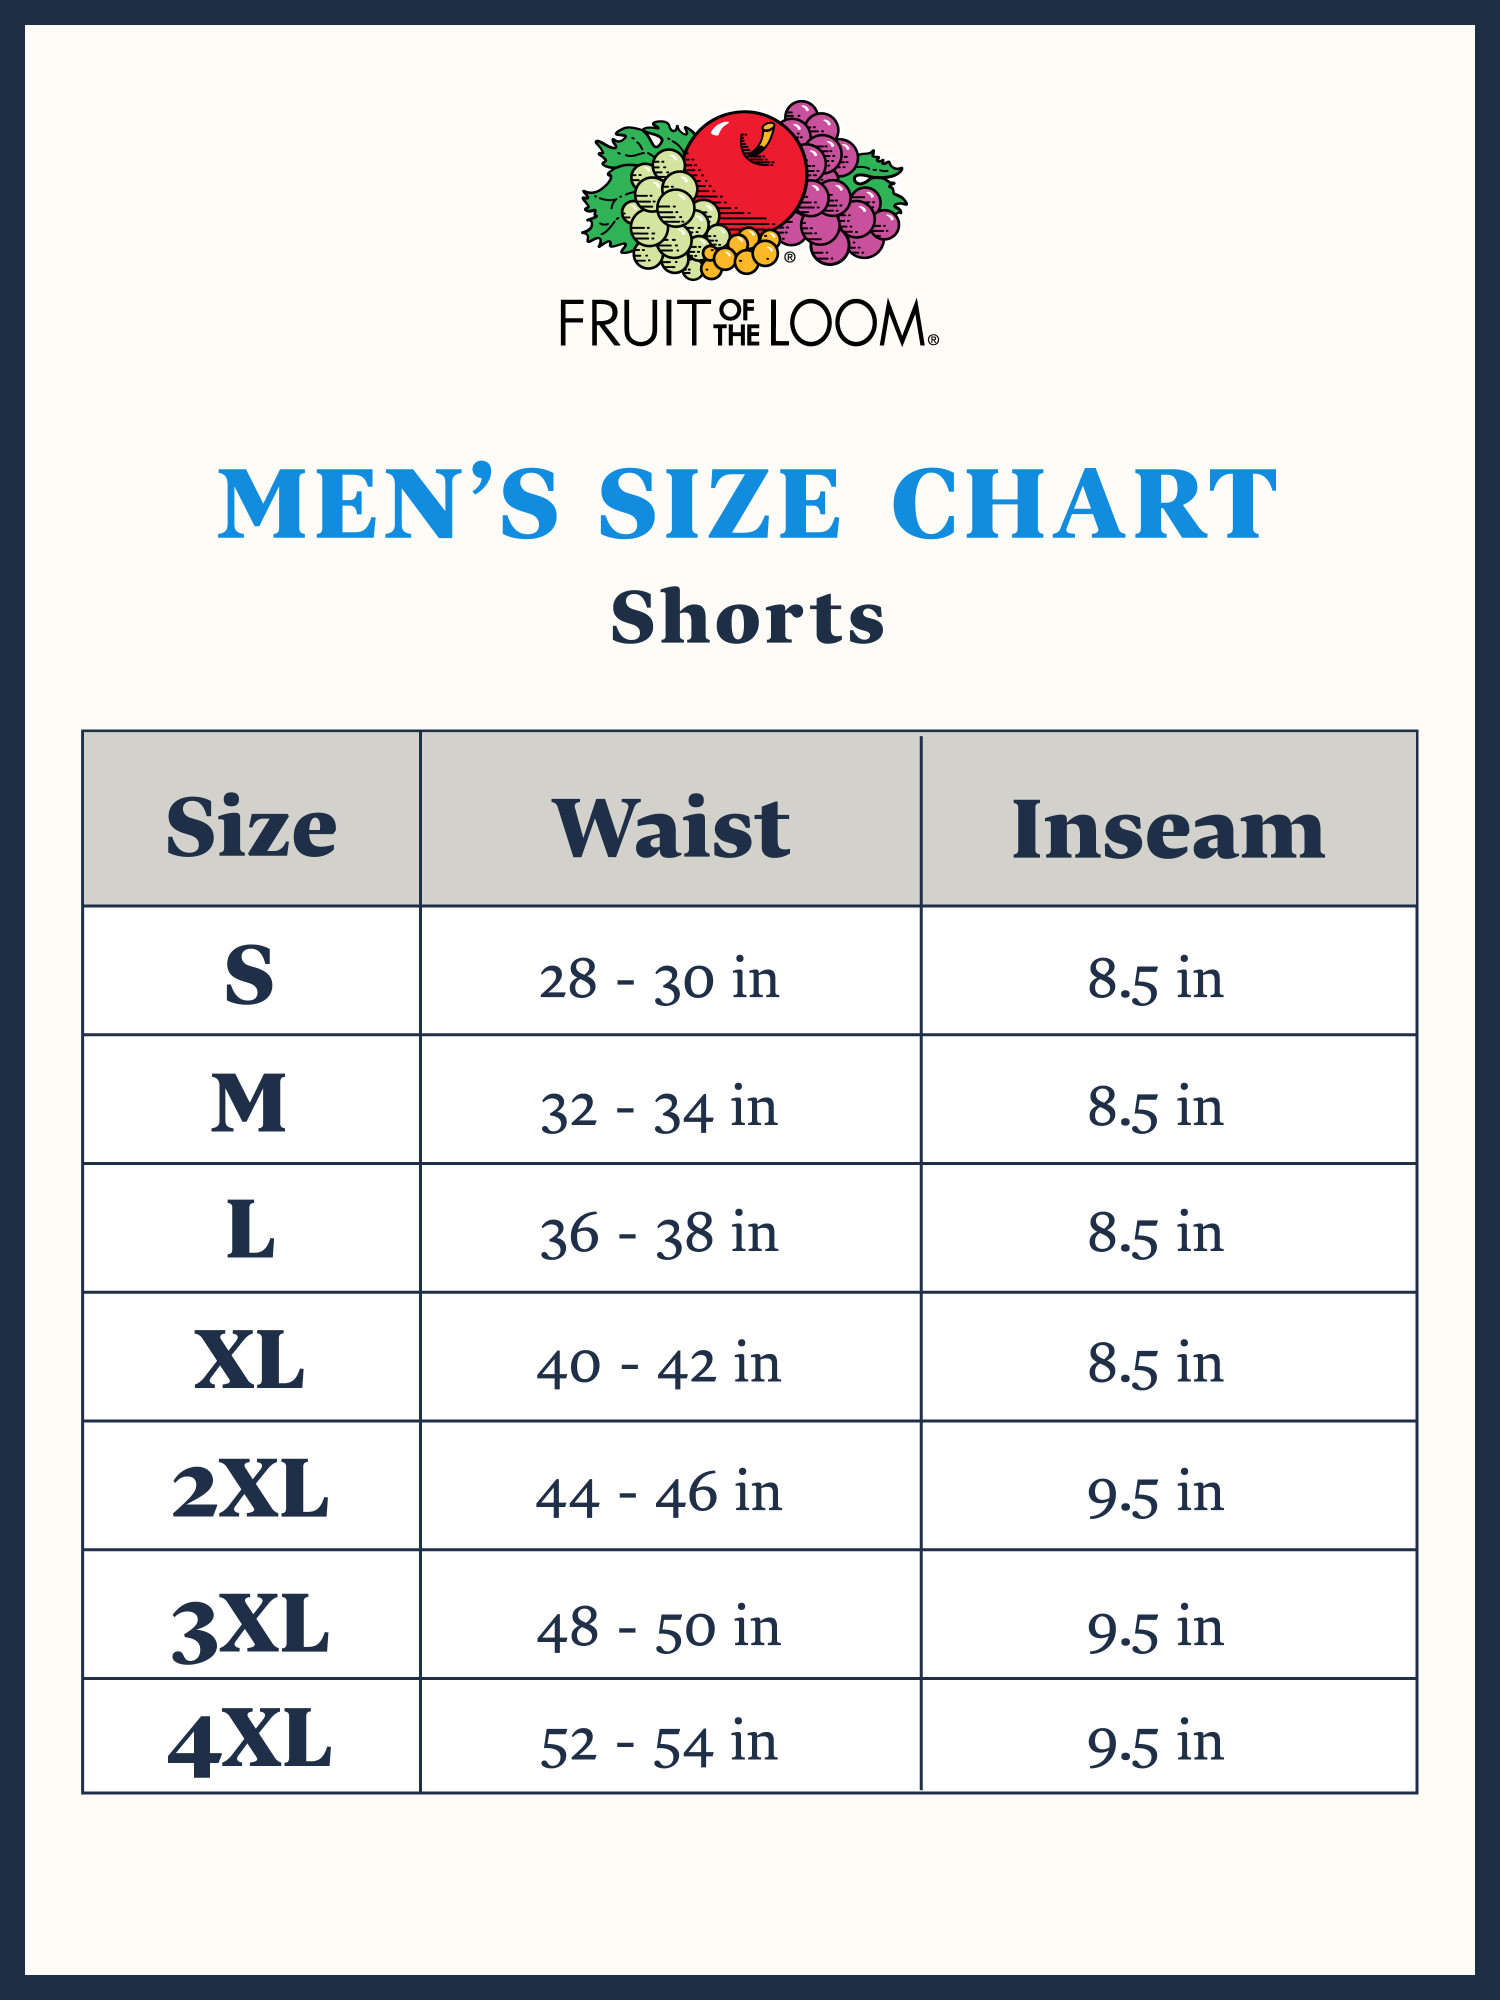 Fruit of the Loom Men's 360 Breathe Jersey Short, 8.5-9.5" Inseam - image 5 of 5